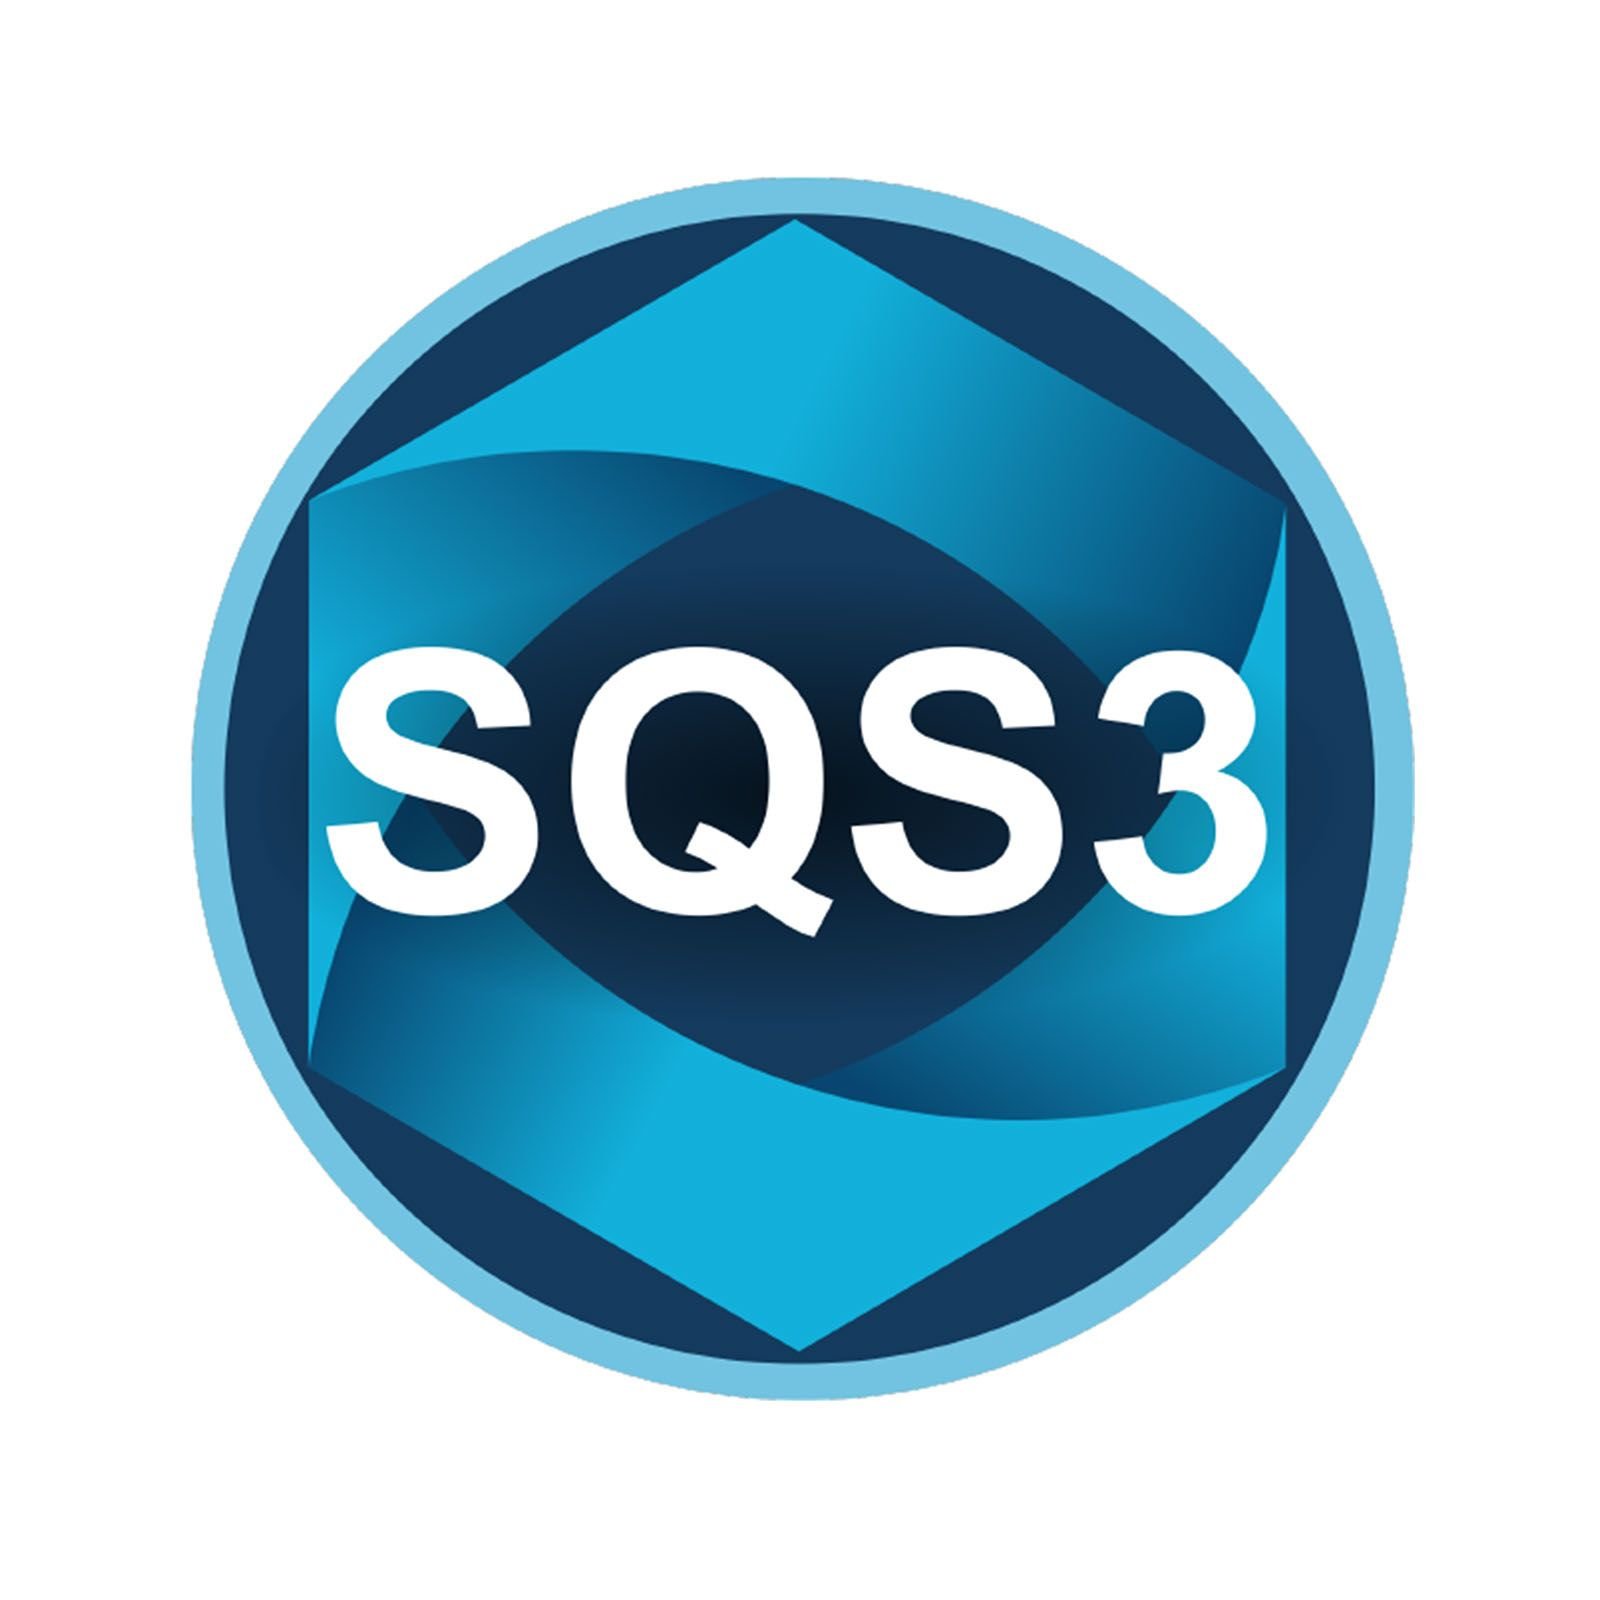 Scalable Quality Solution 3 – SQS3 Produktfoto